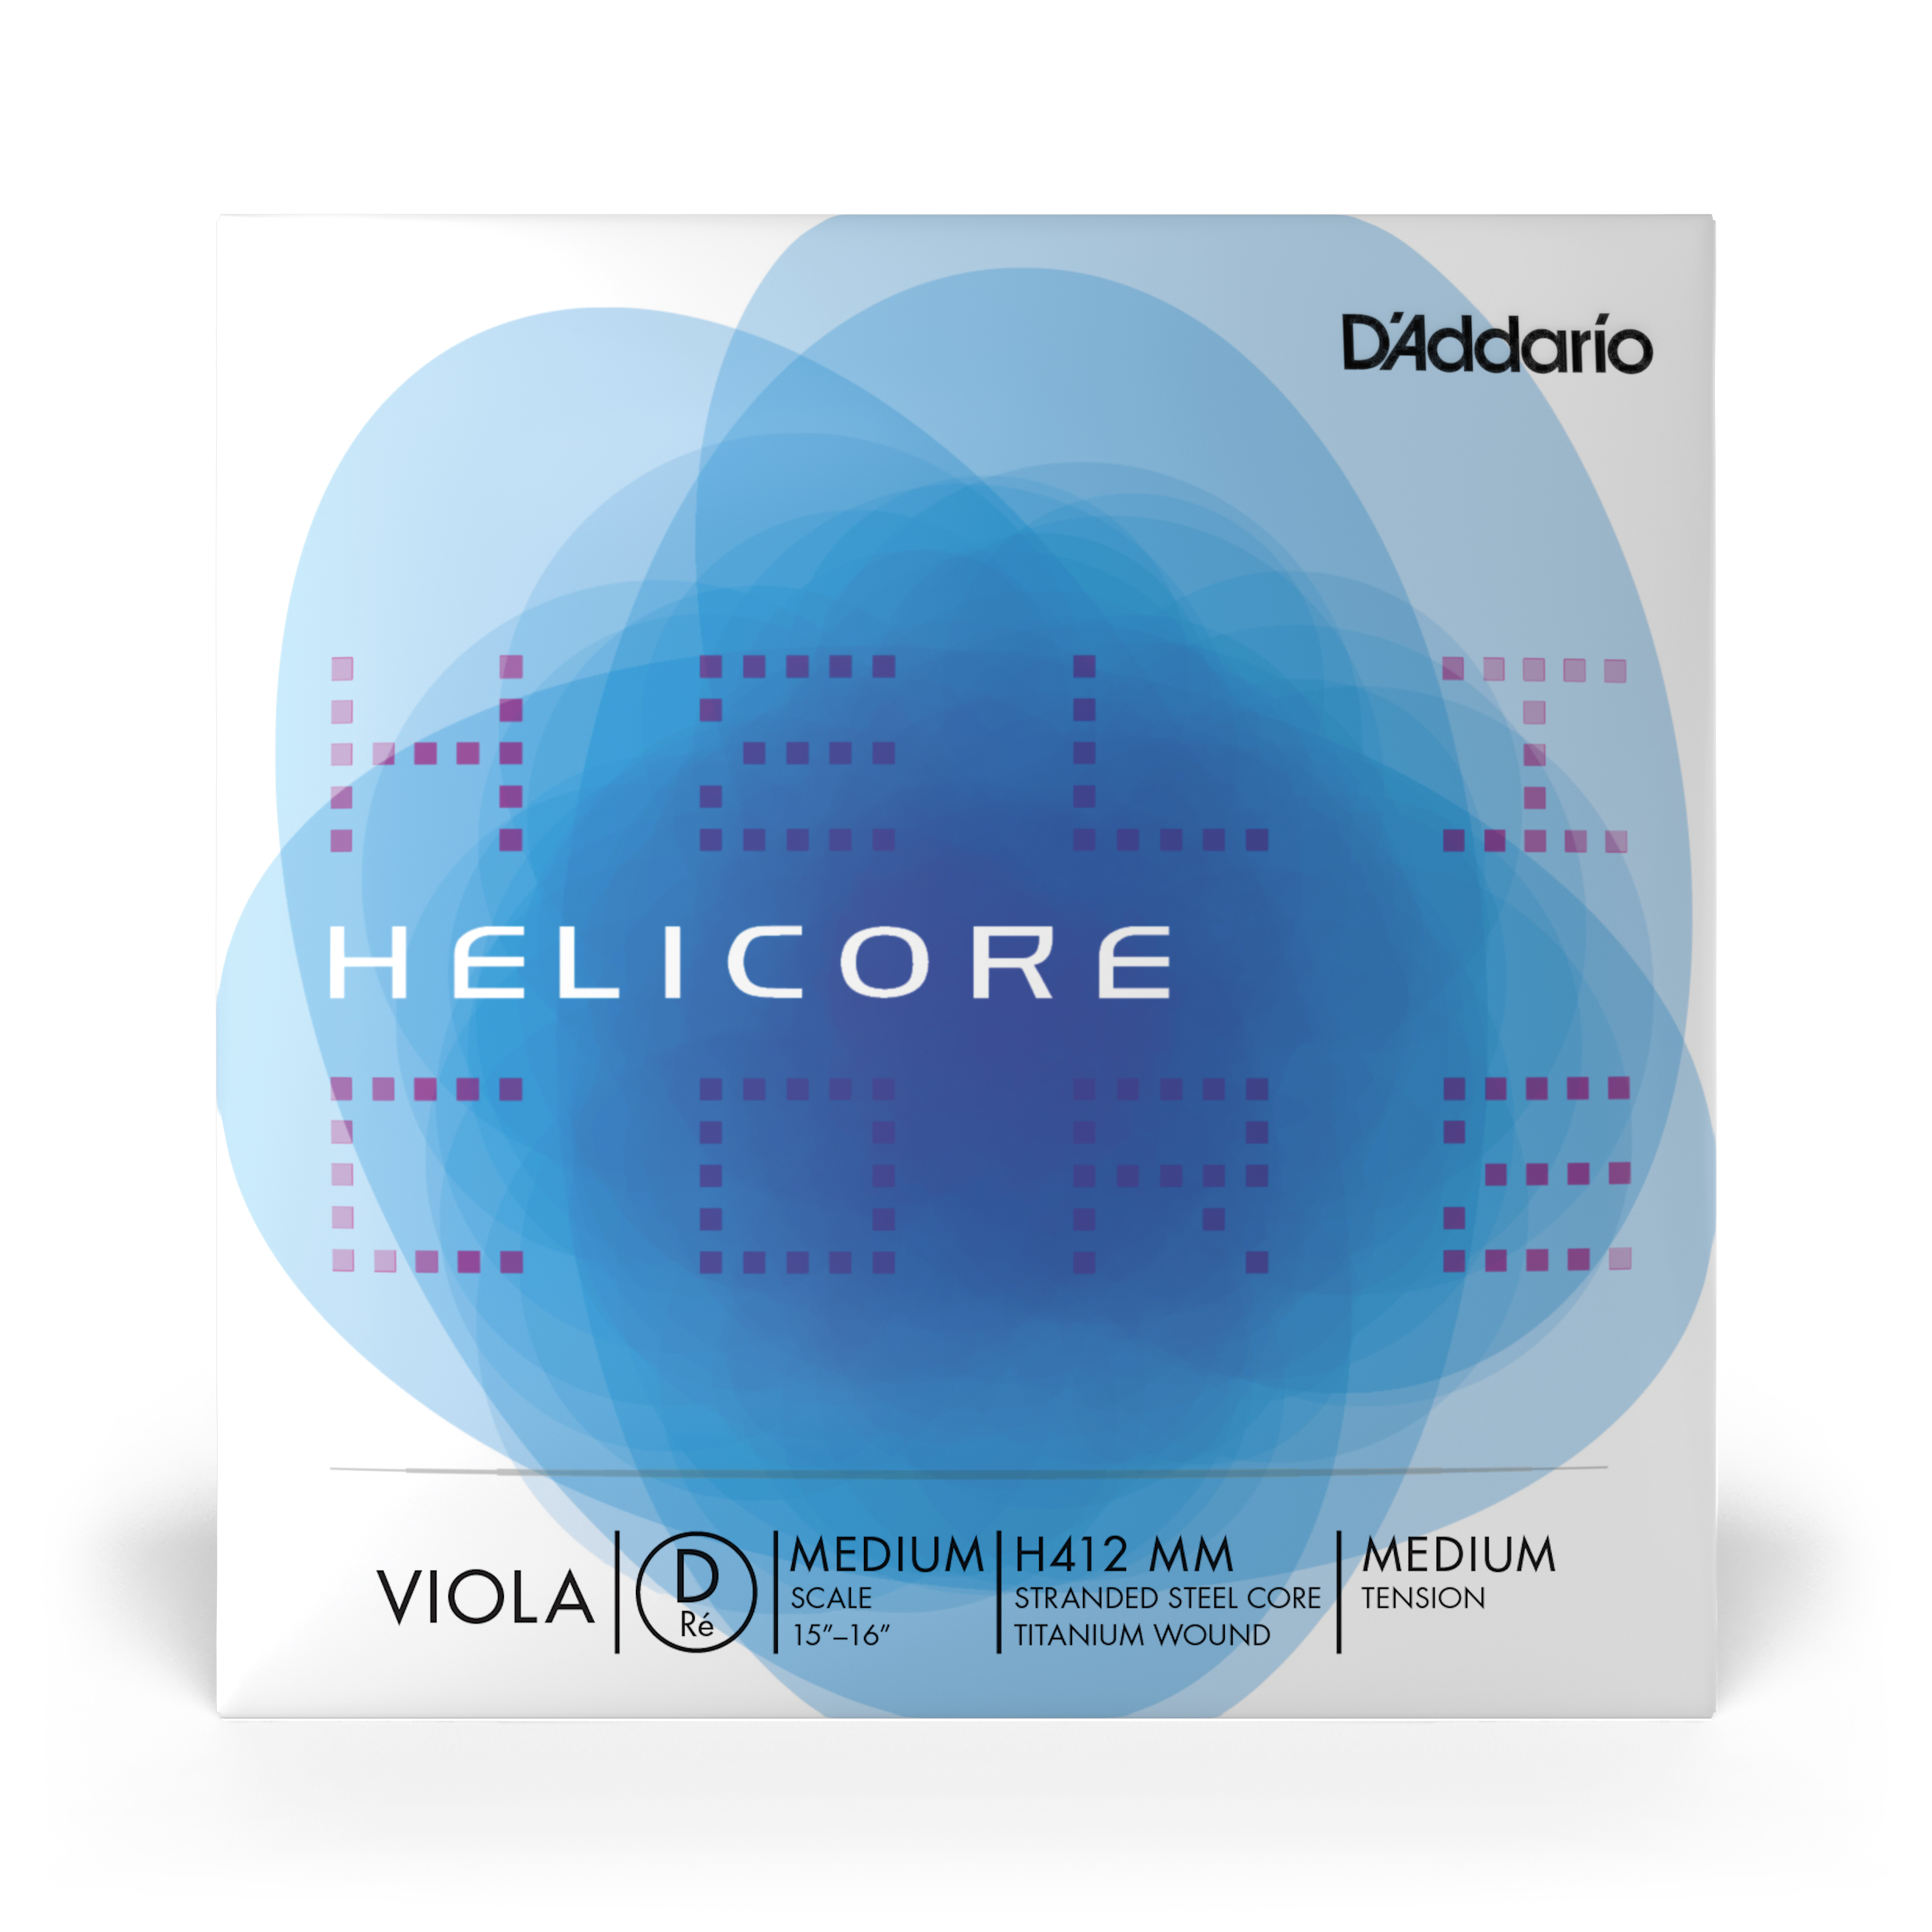 Daddario orchestral it H412 mm corda singola re d'addario helicore per viola, medium scale, tensione media